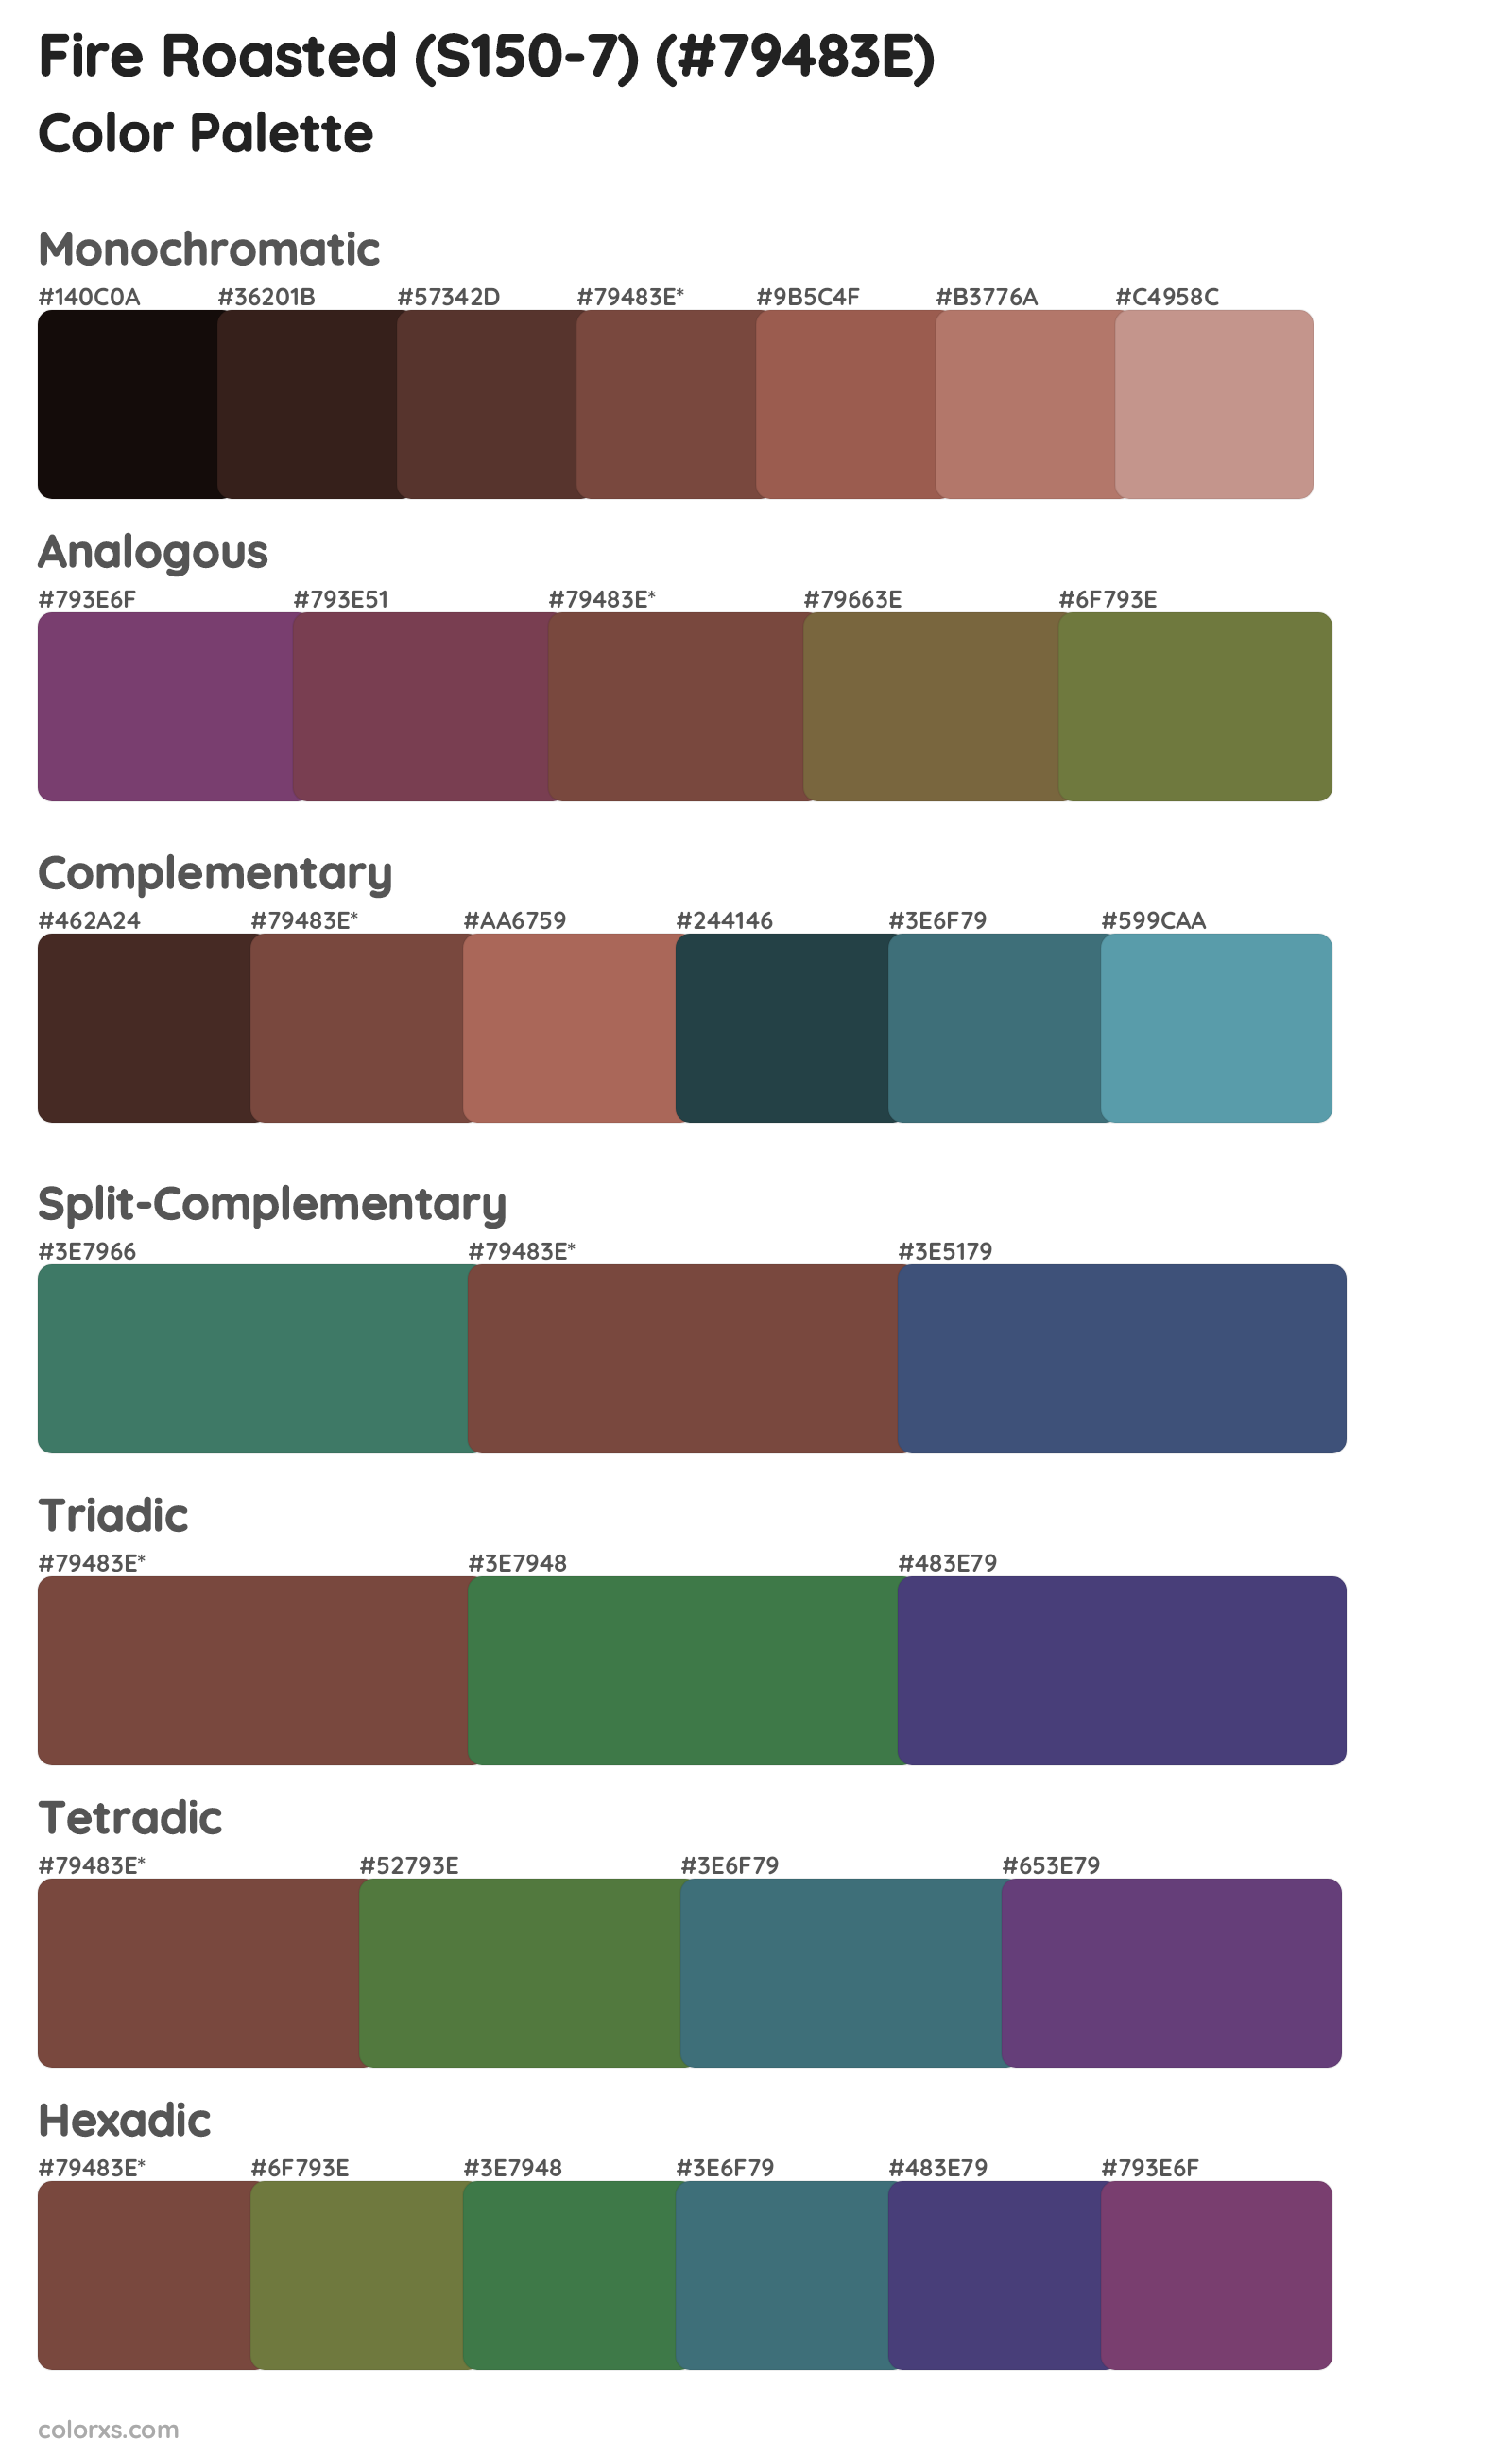 Fire Roasted (S150-7) Color Scheme Palettes